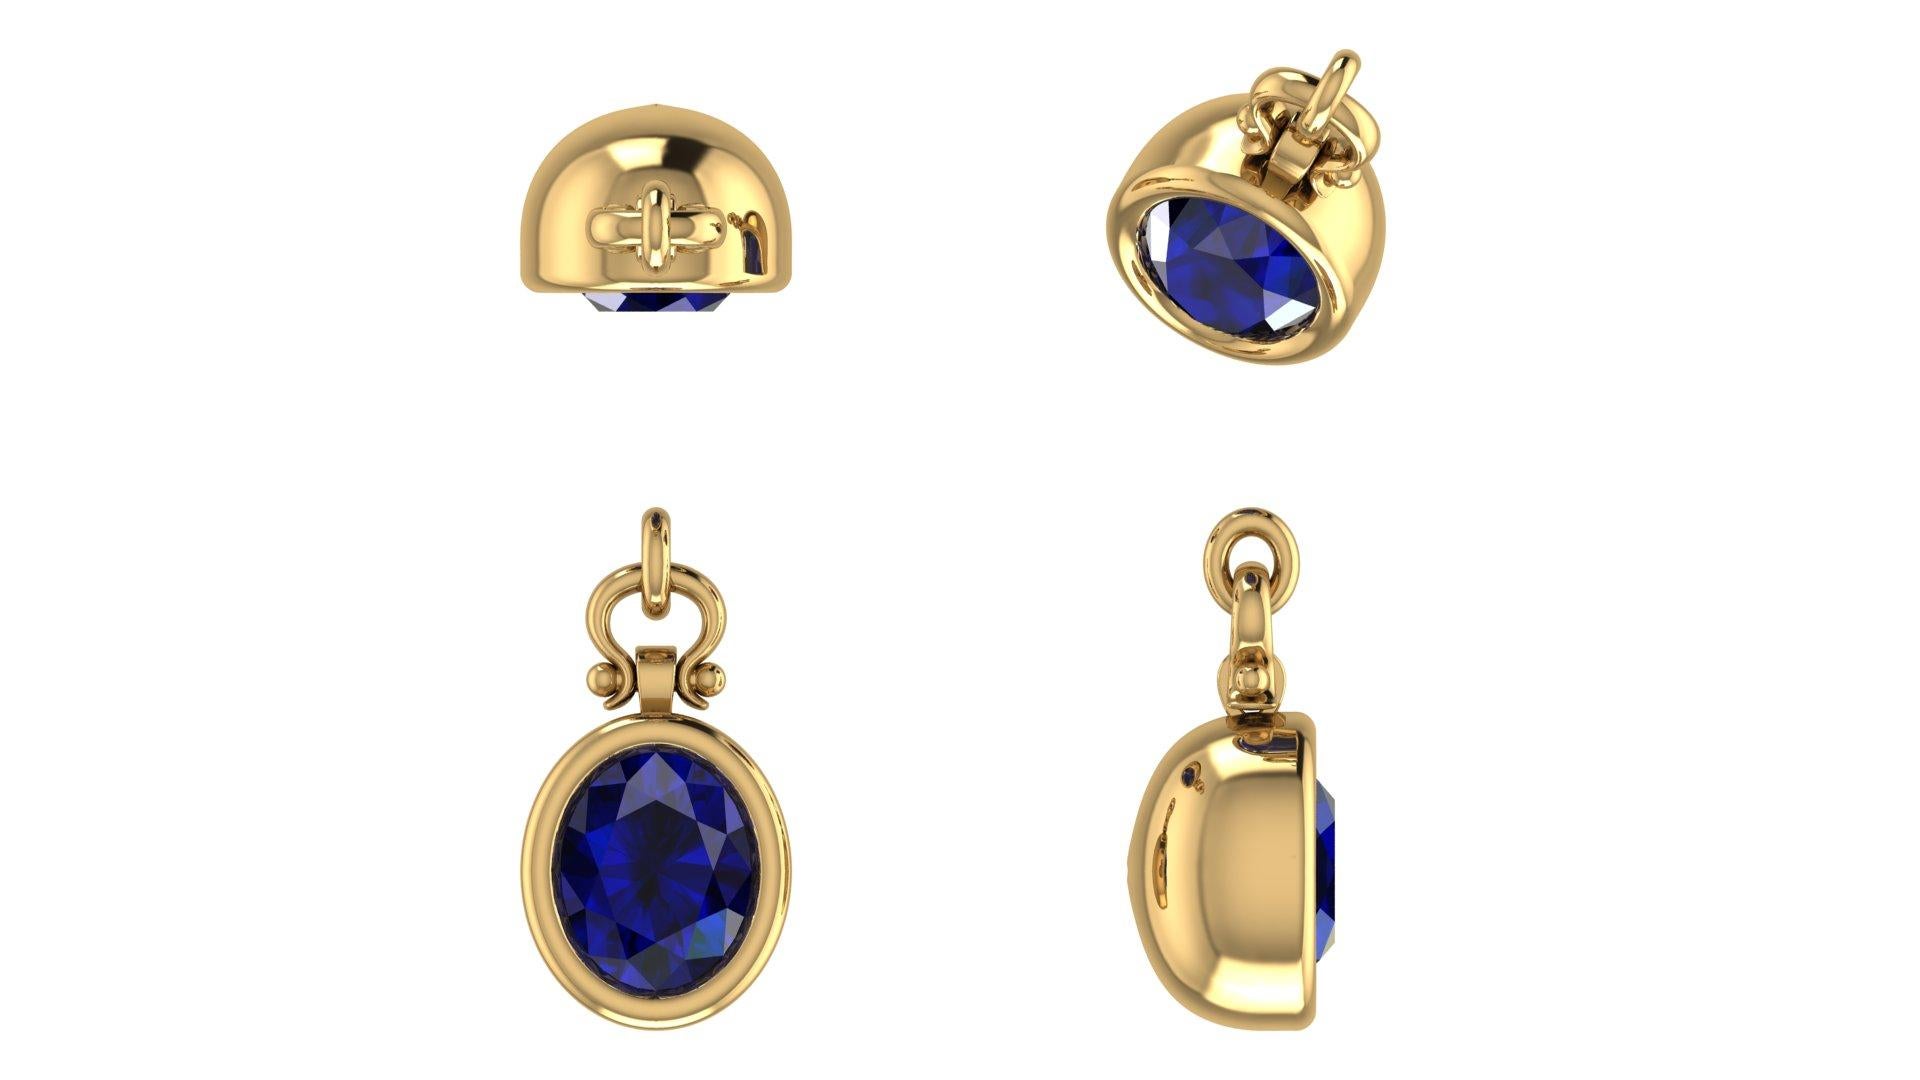 Contemporary Berberyn Certified 3.01 Carat Oval Cut Blue Sapphire Pendant Necklace in 18k For Sale